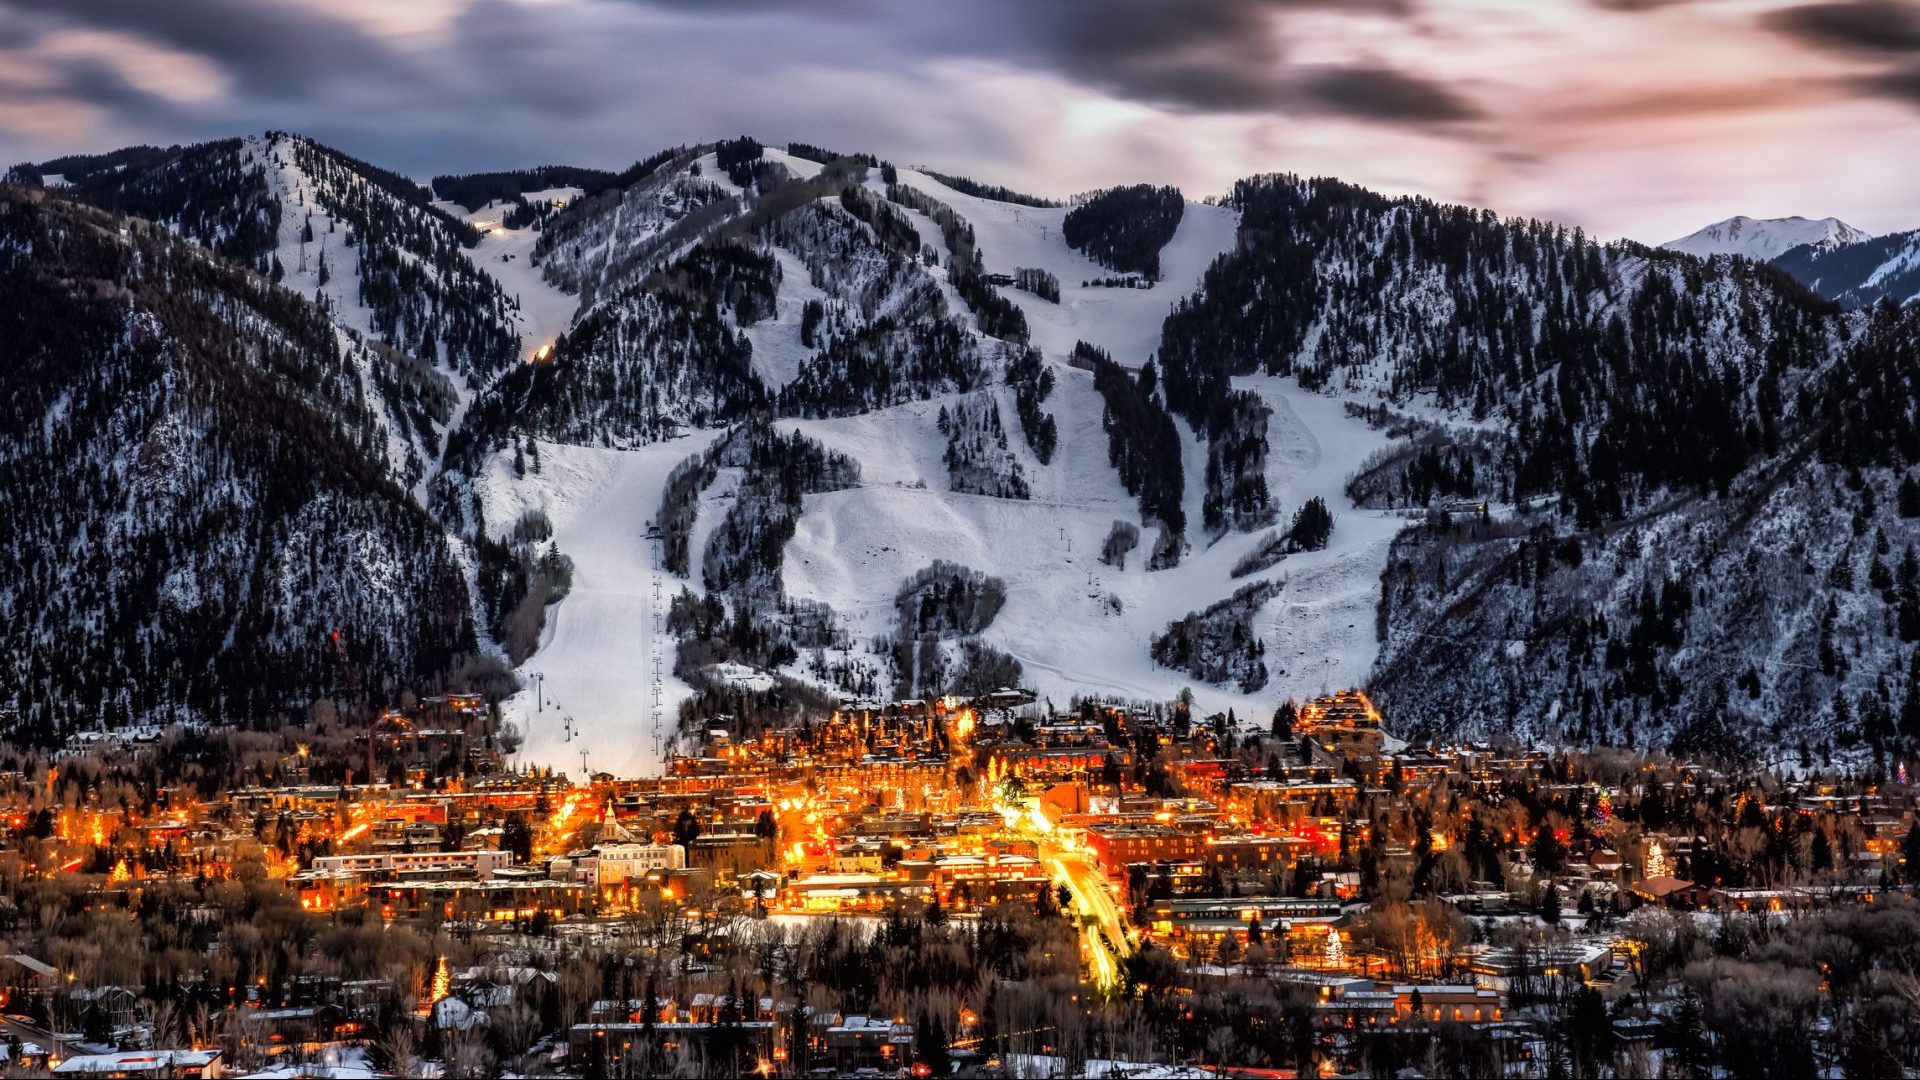 8 Ski Towns Just Like Aspen but Much Cheaper